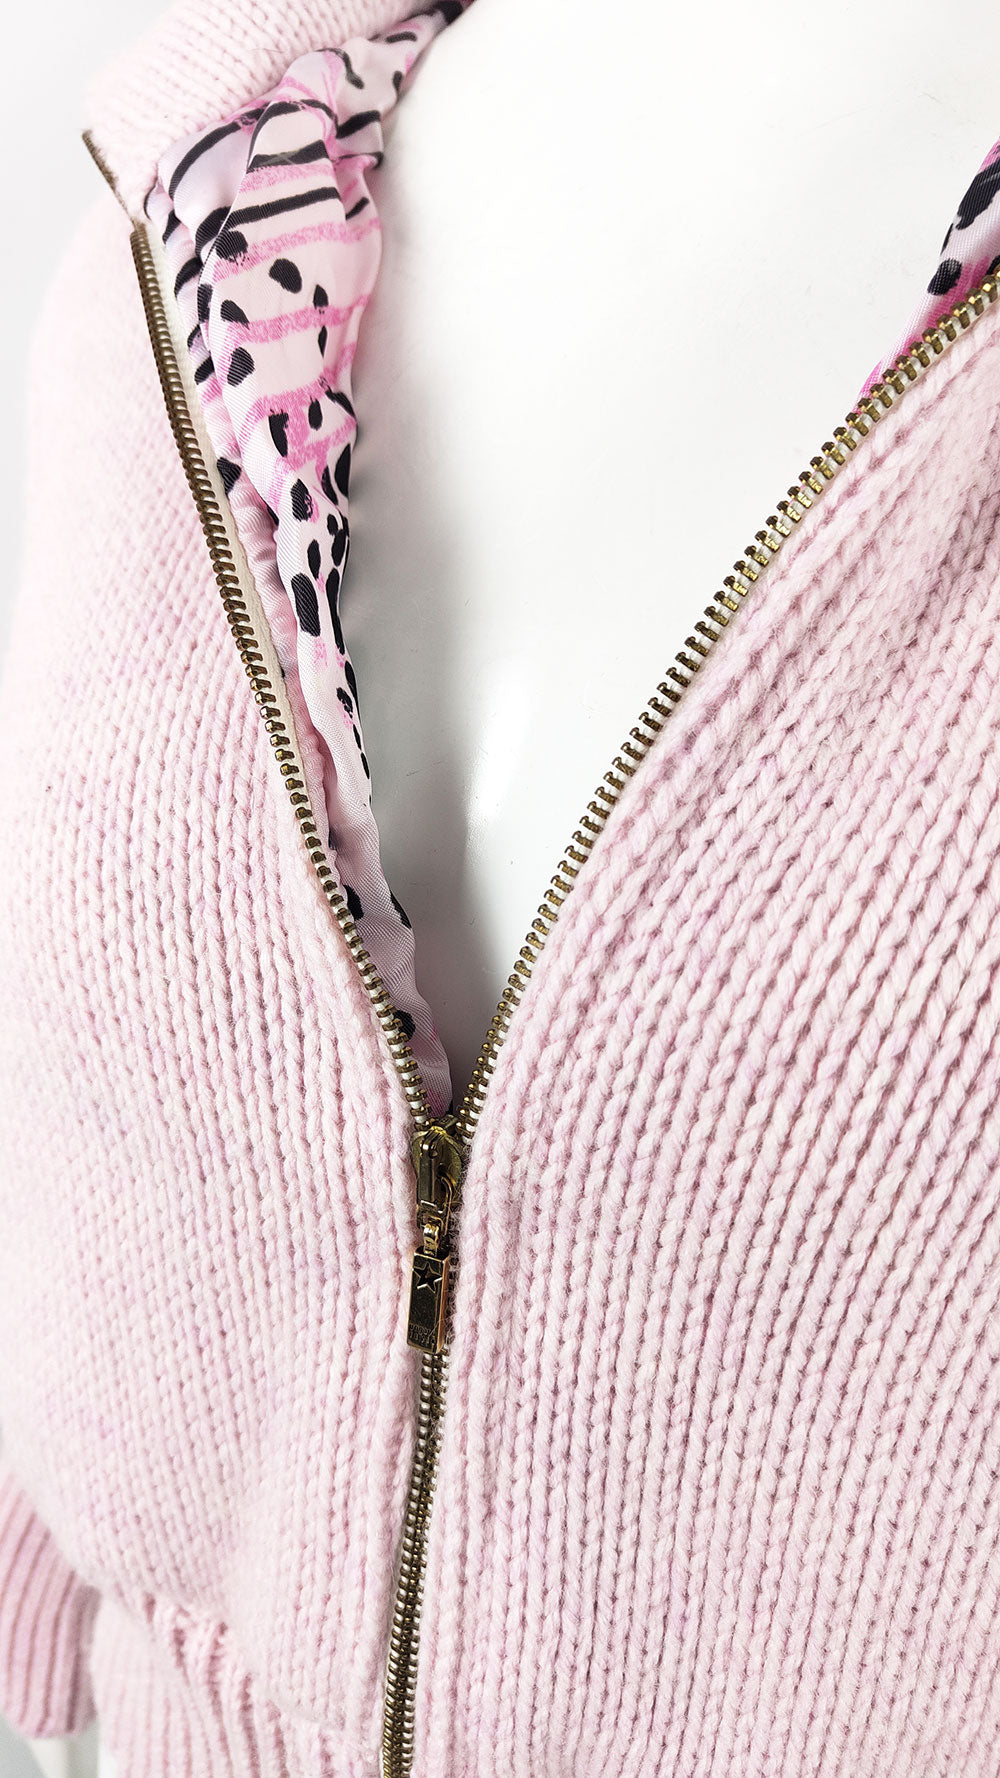 Emanuel Ungaro Vintage Y2k Pastel Pink Knit Jacket